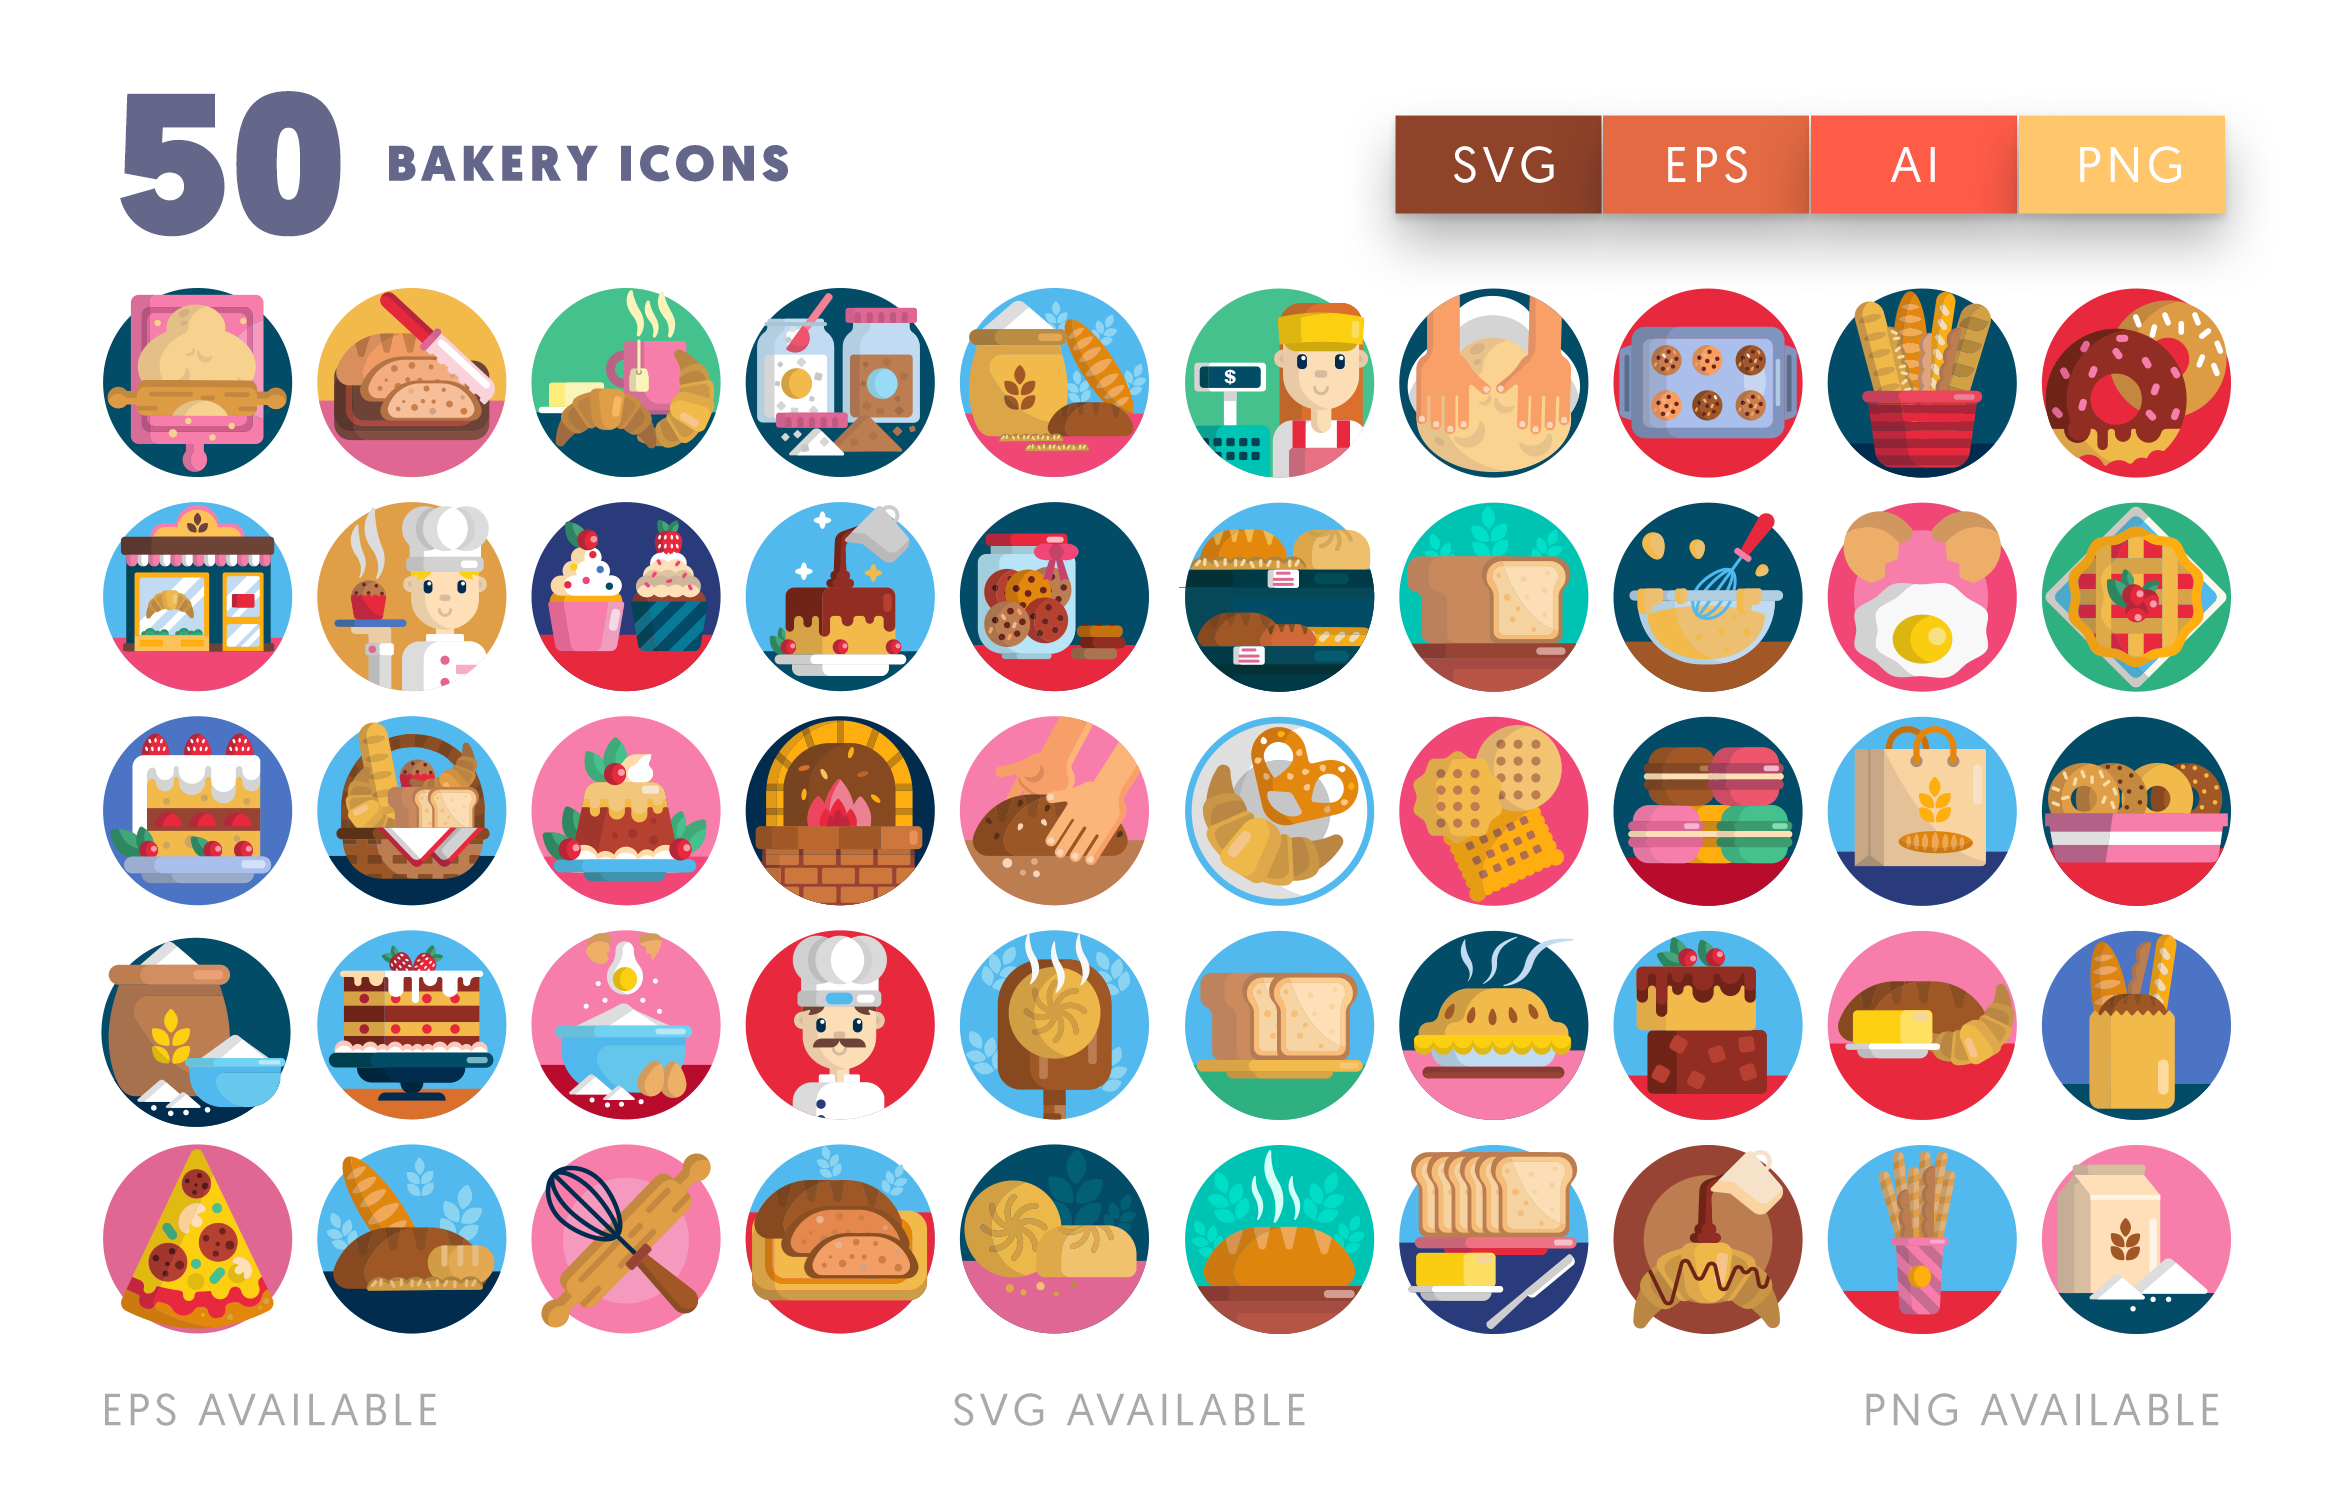 50 Bakery Icons